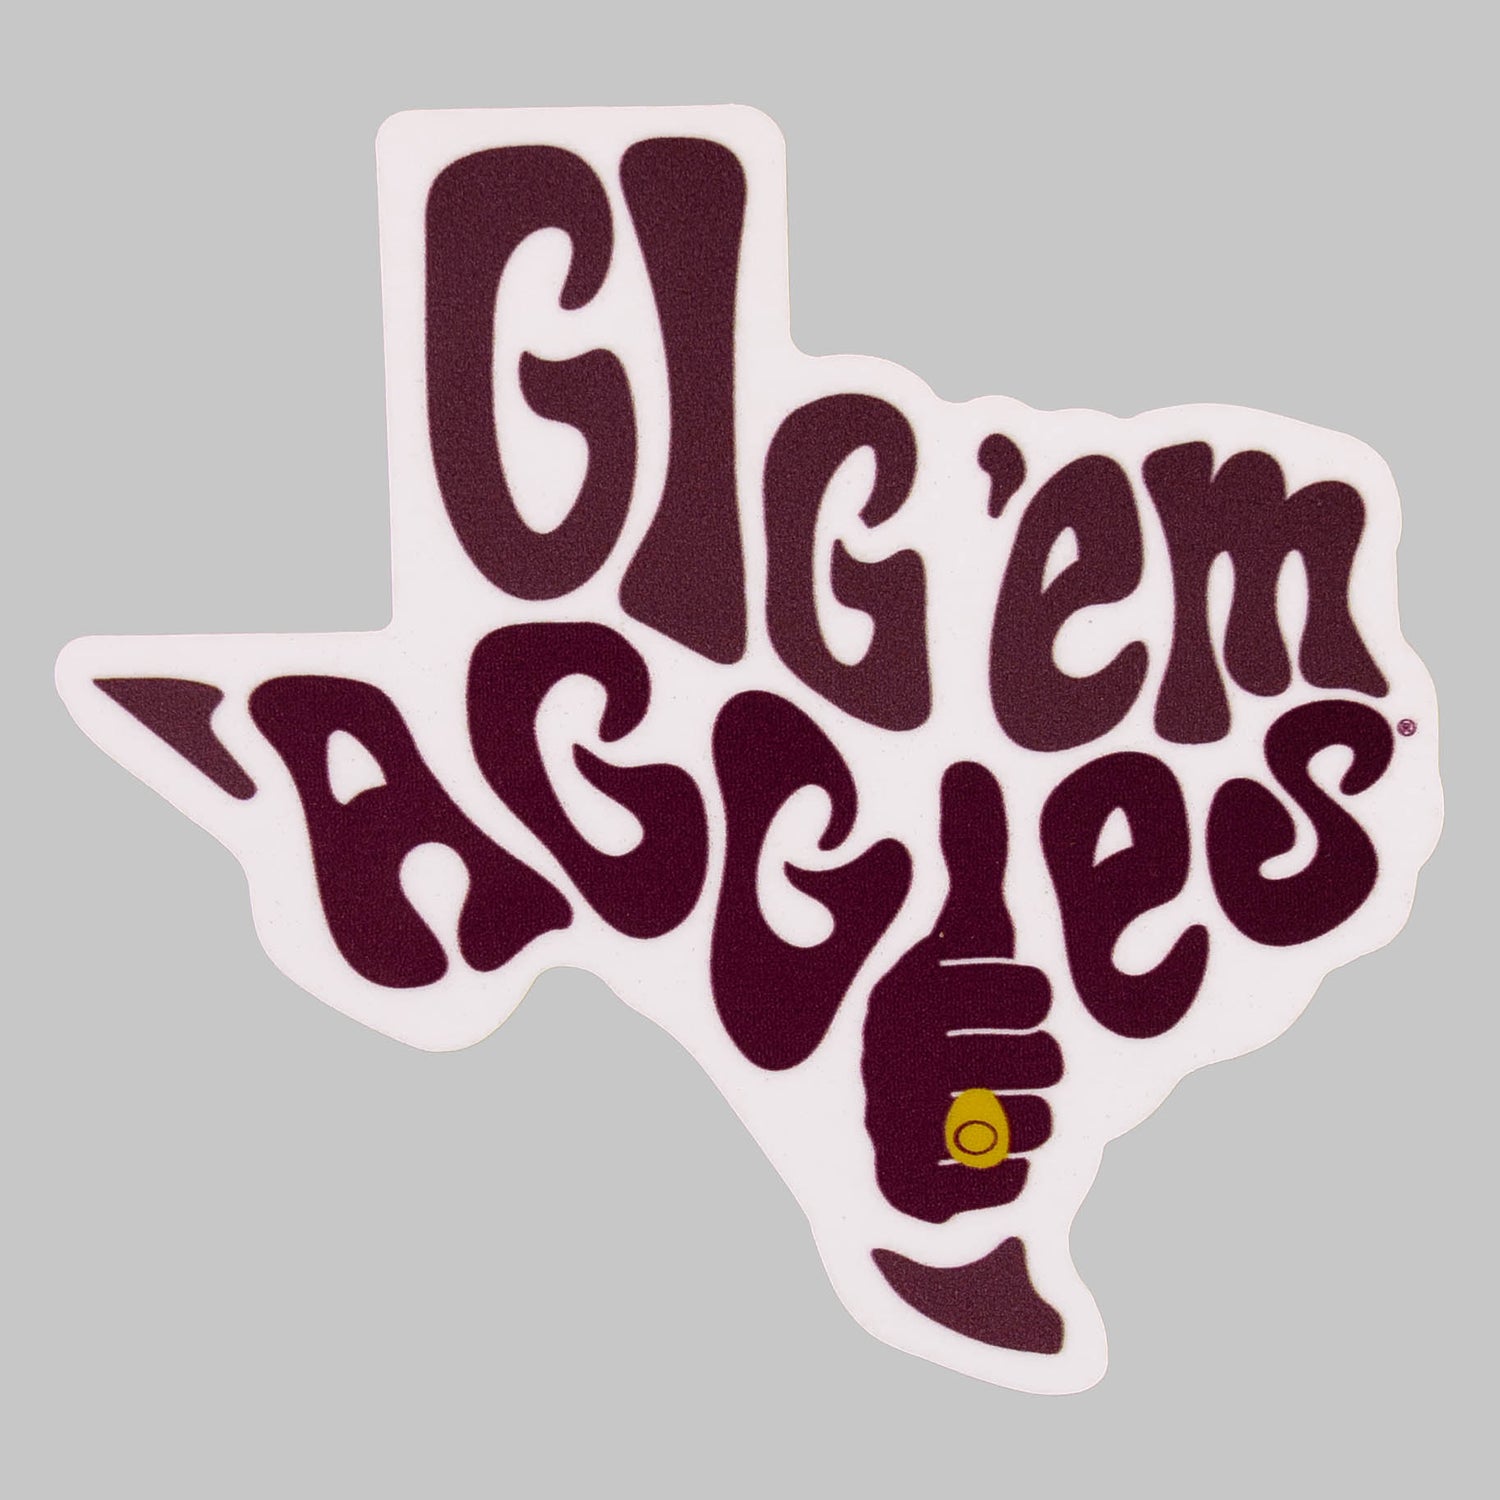 Gig Em Aggies Texas Thumb Dizzler Sticker